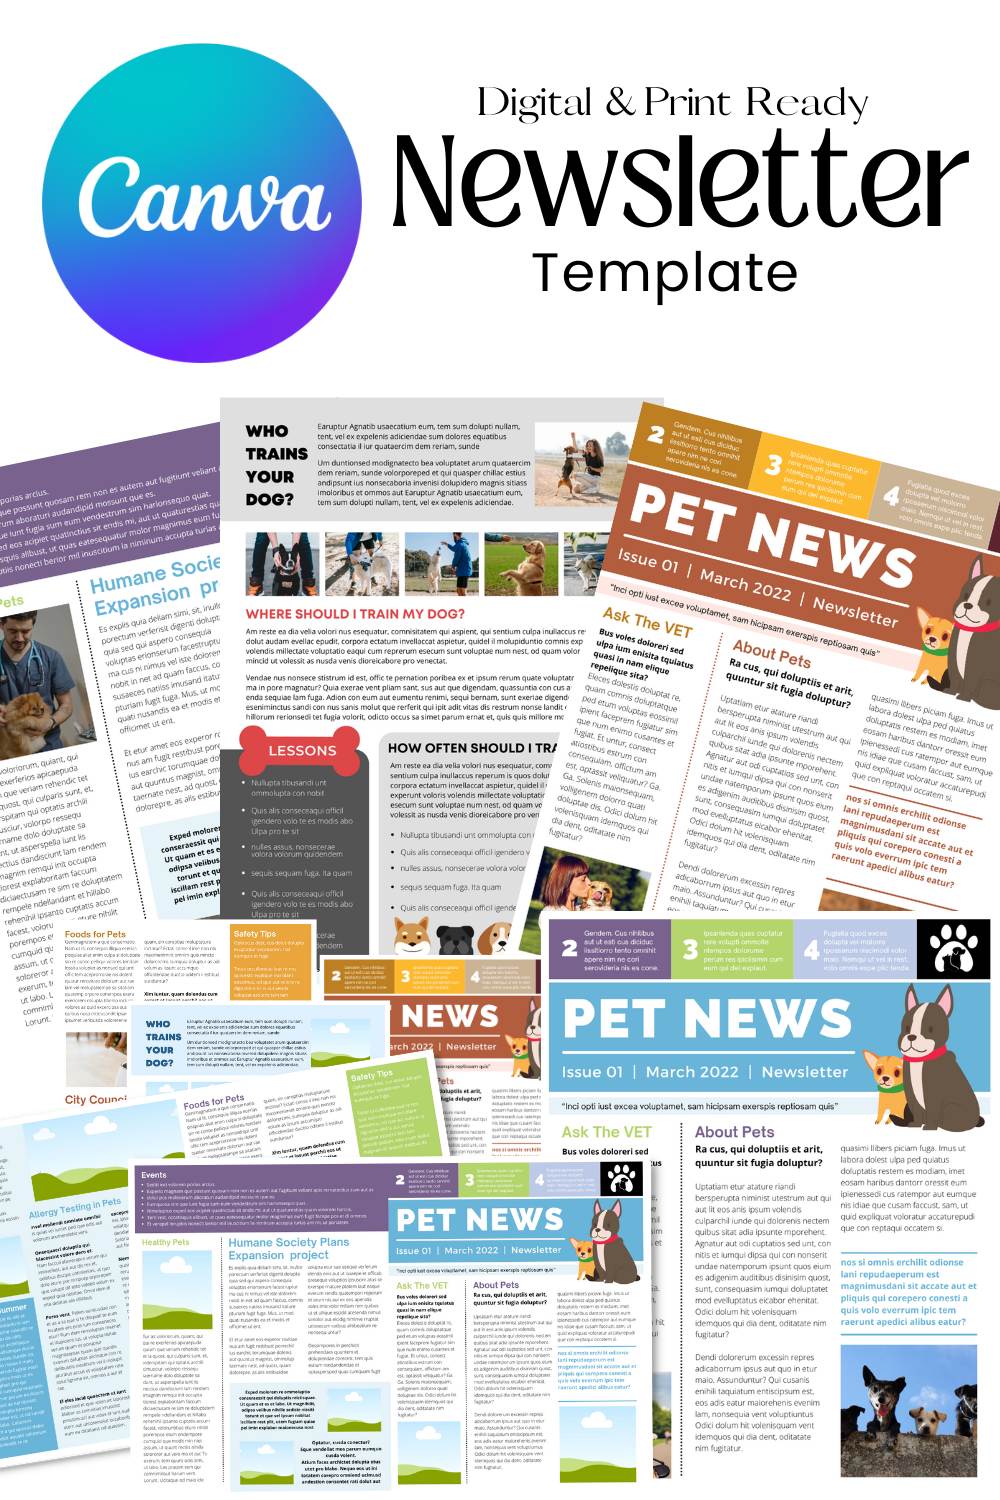 Pet Care Newsletter Canva Template pinterest image.